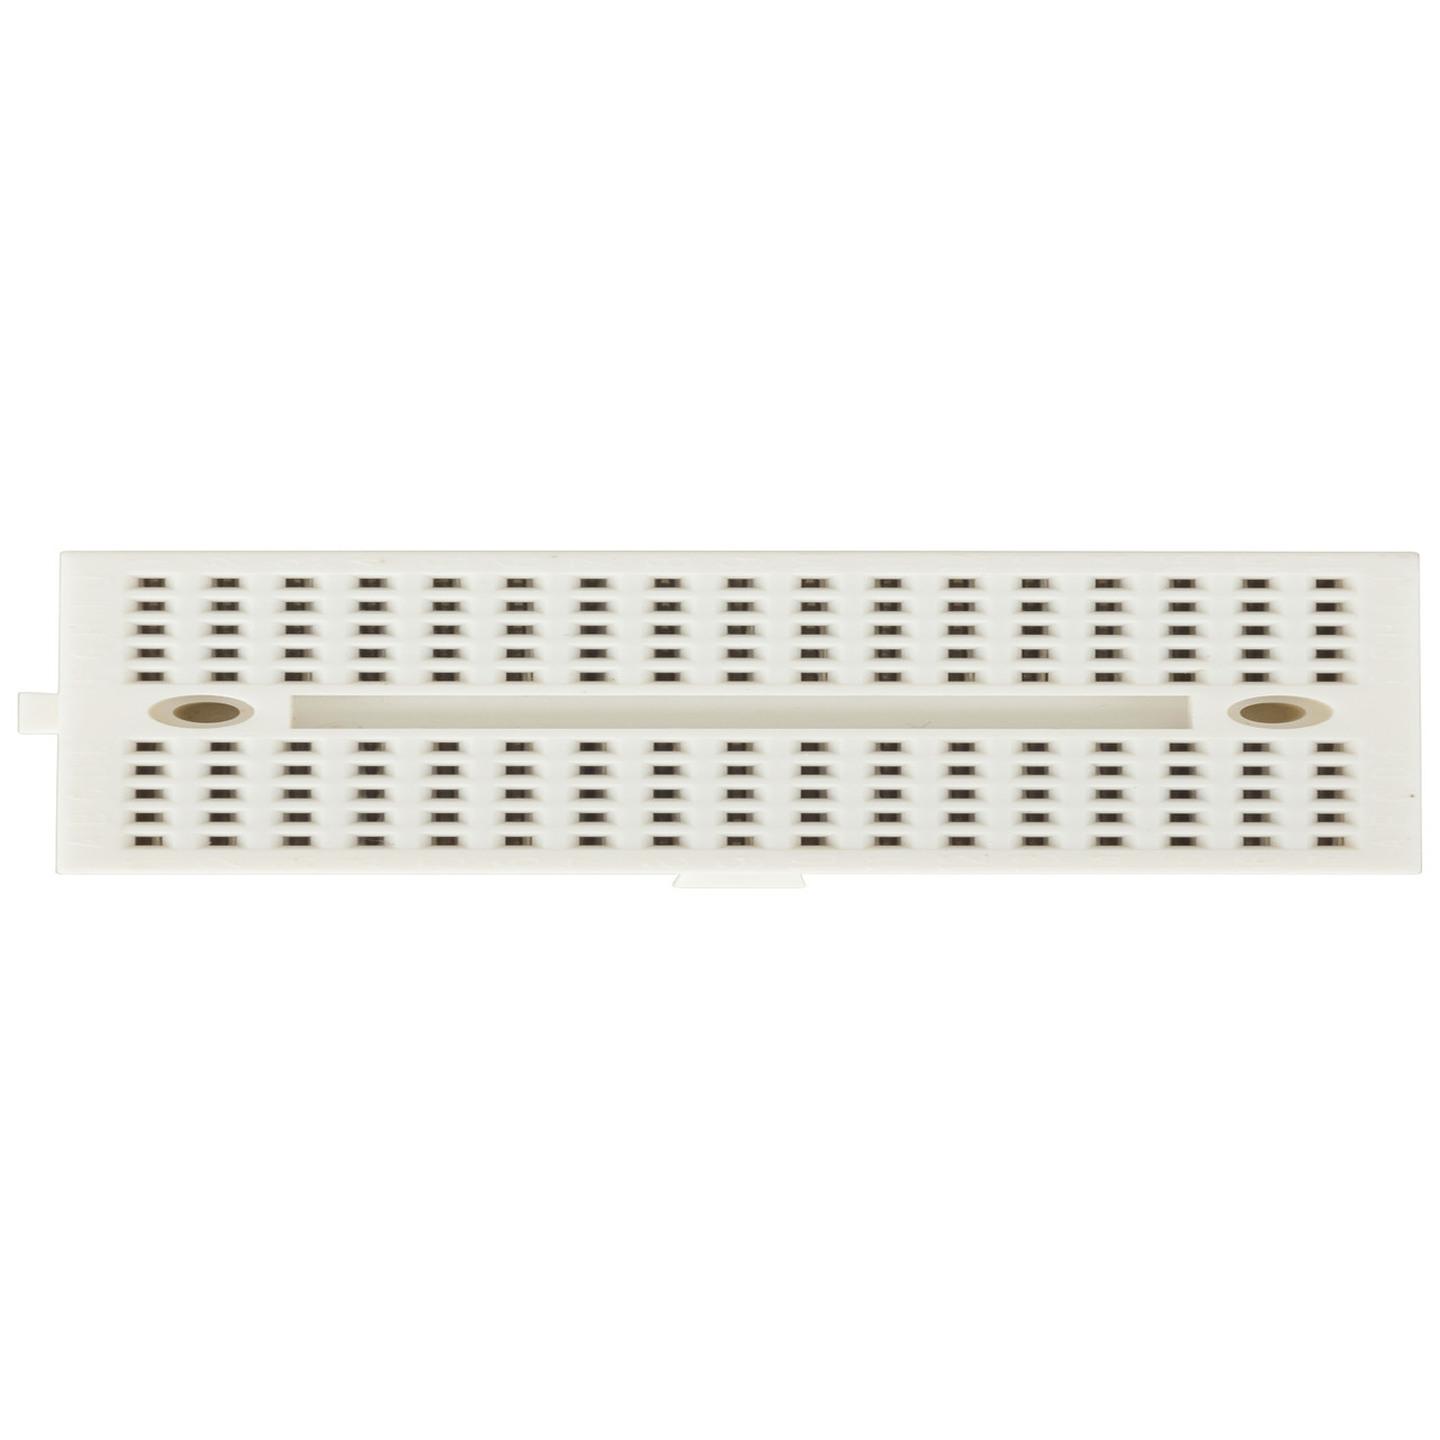 Arduino Compatible Mini Breadboard with 170 Tie Points